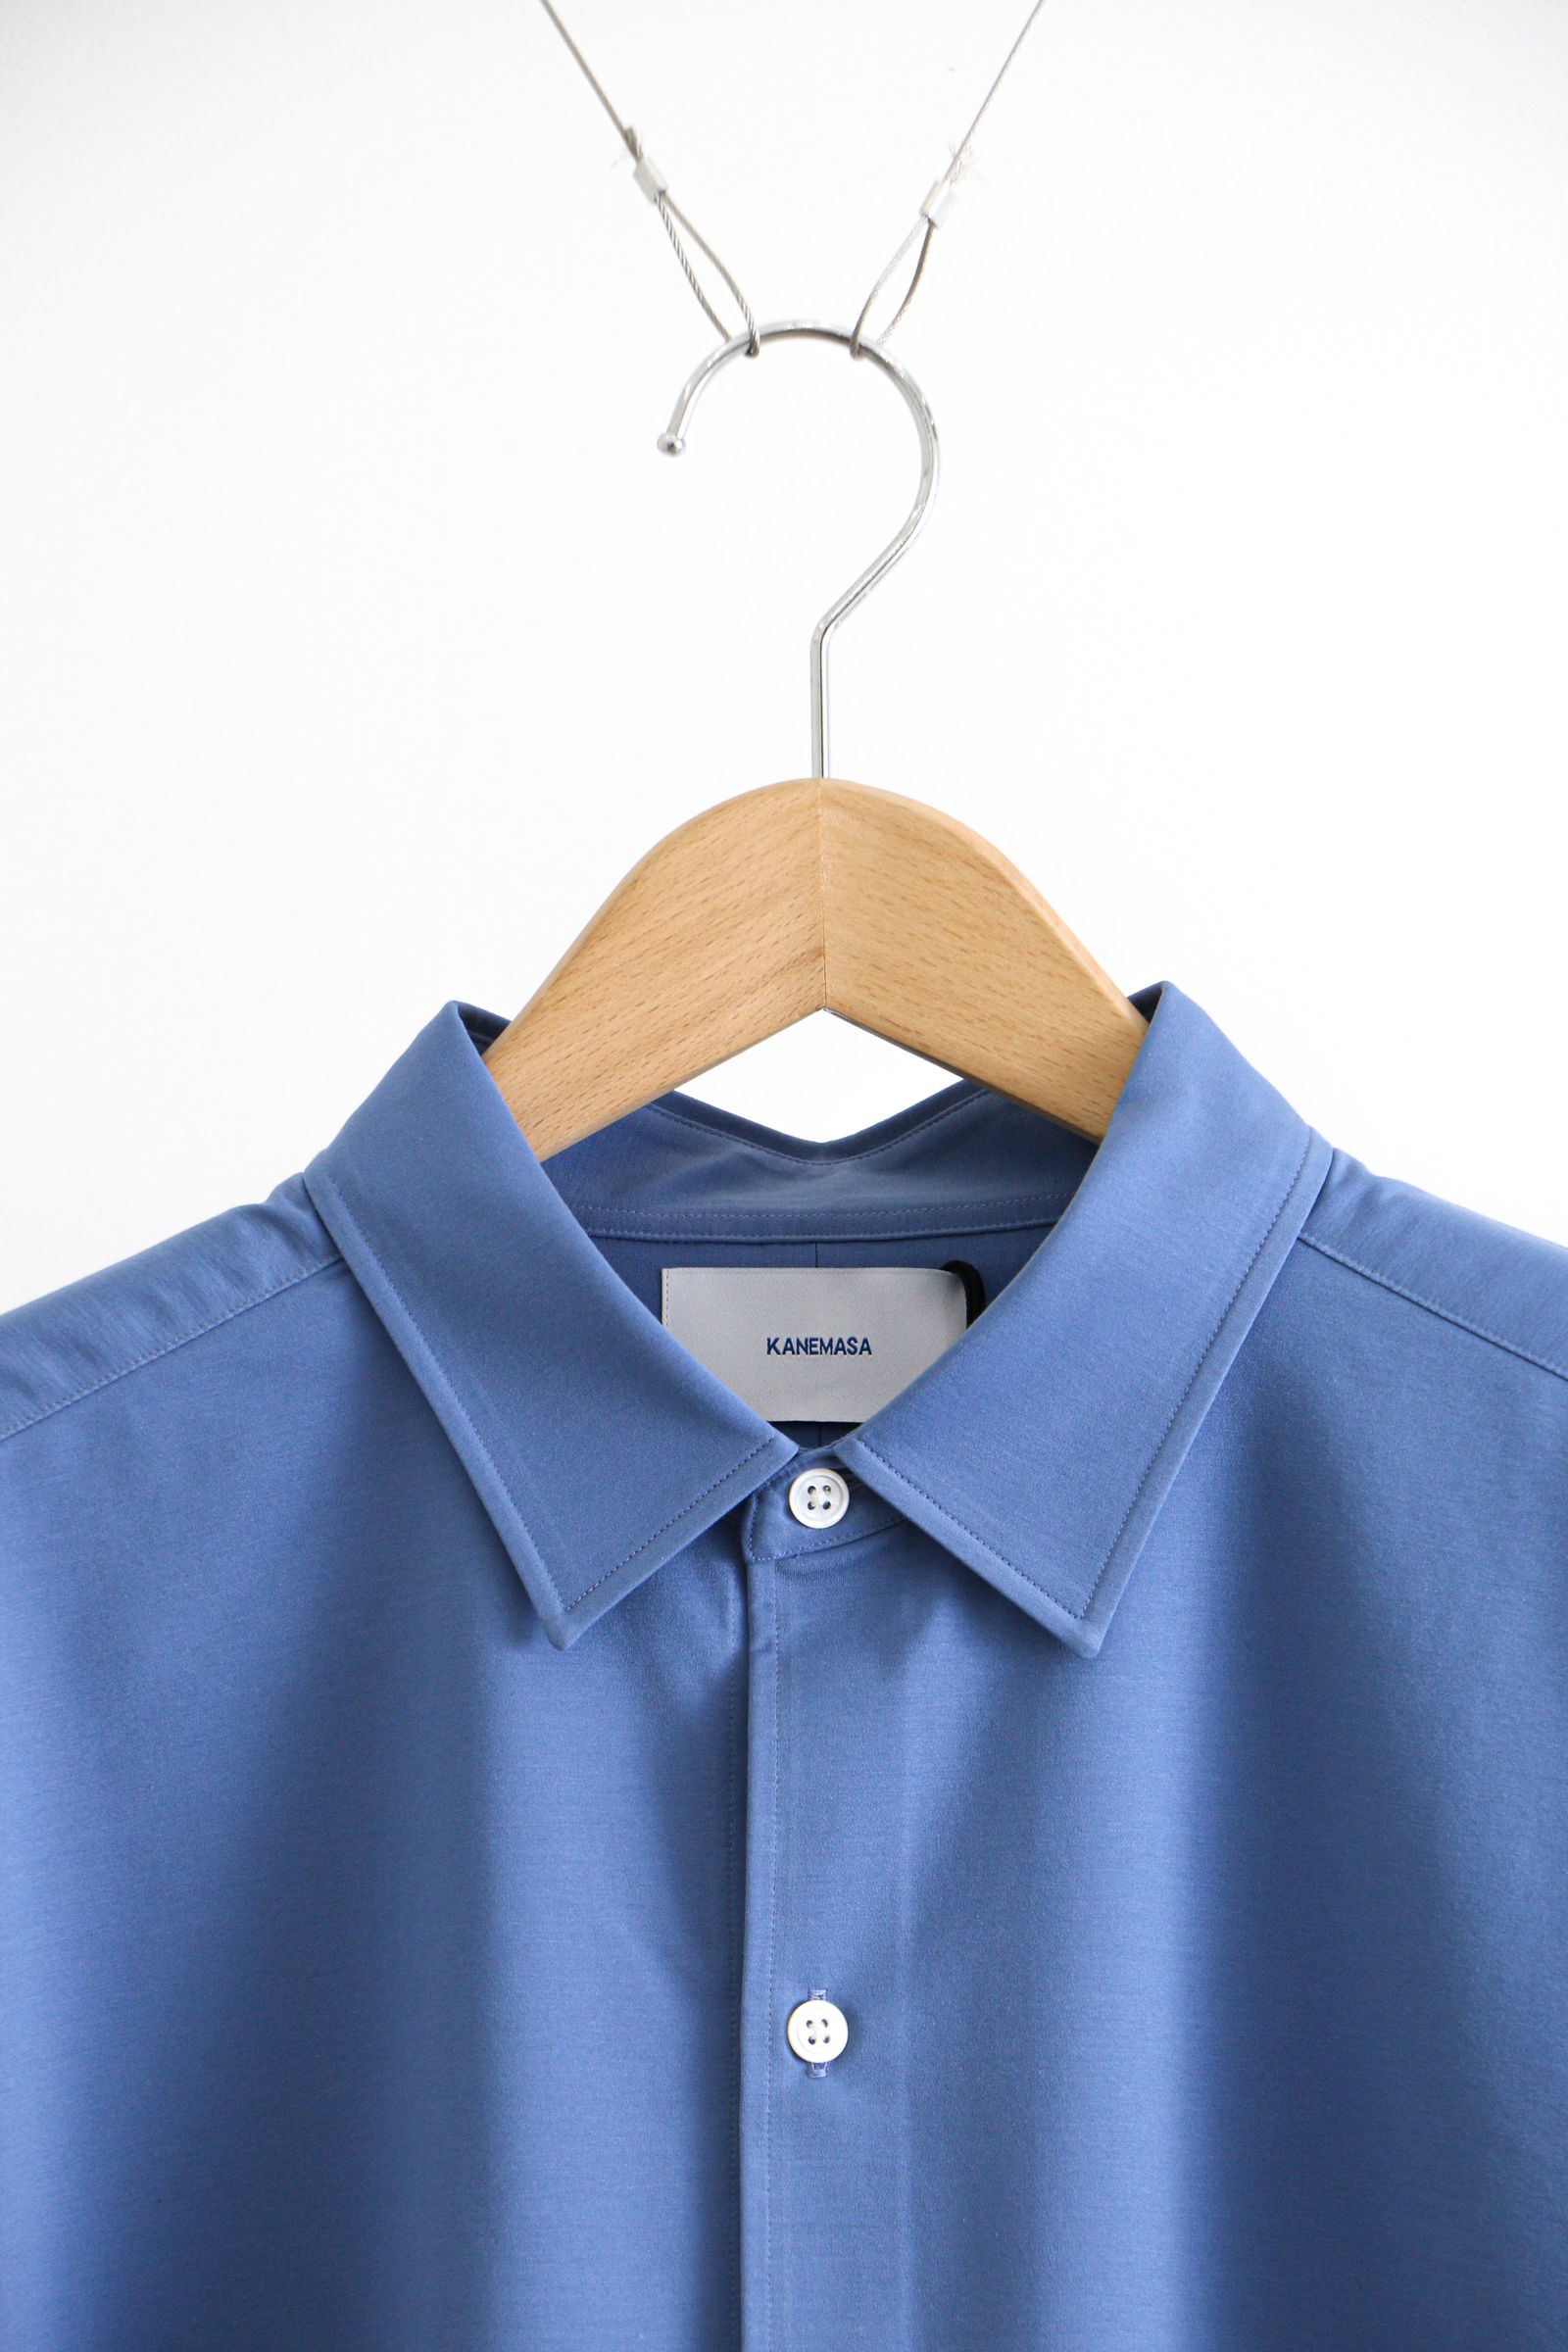 KANEMASA PHIL. - Royal Ox Dress Jersey Short Sleeve Shirt